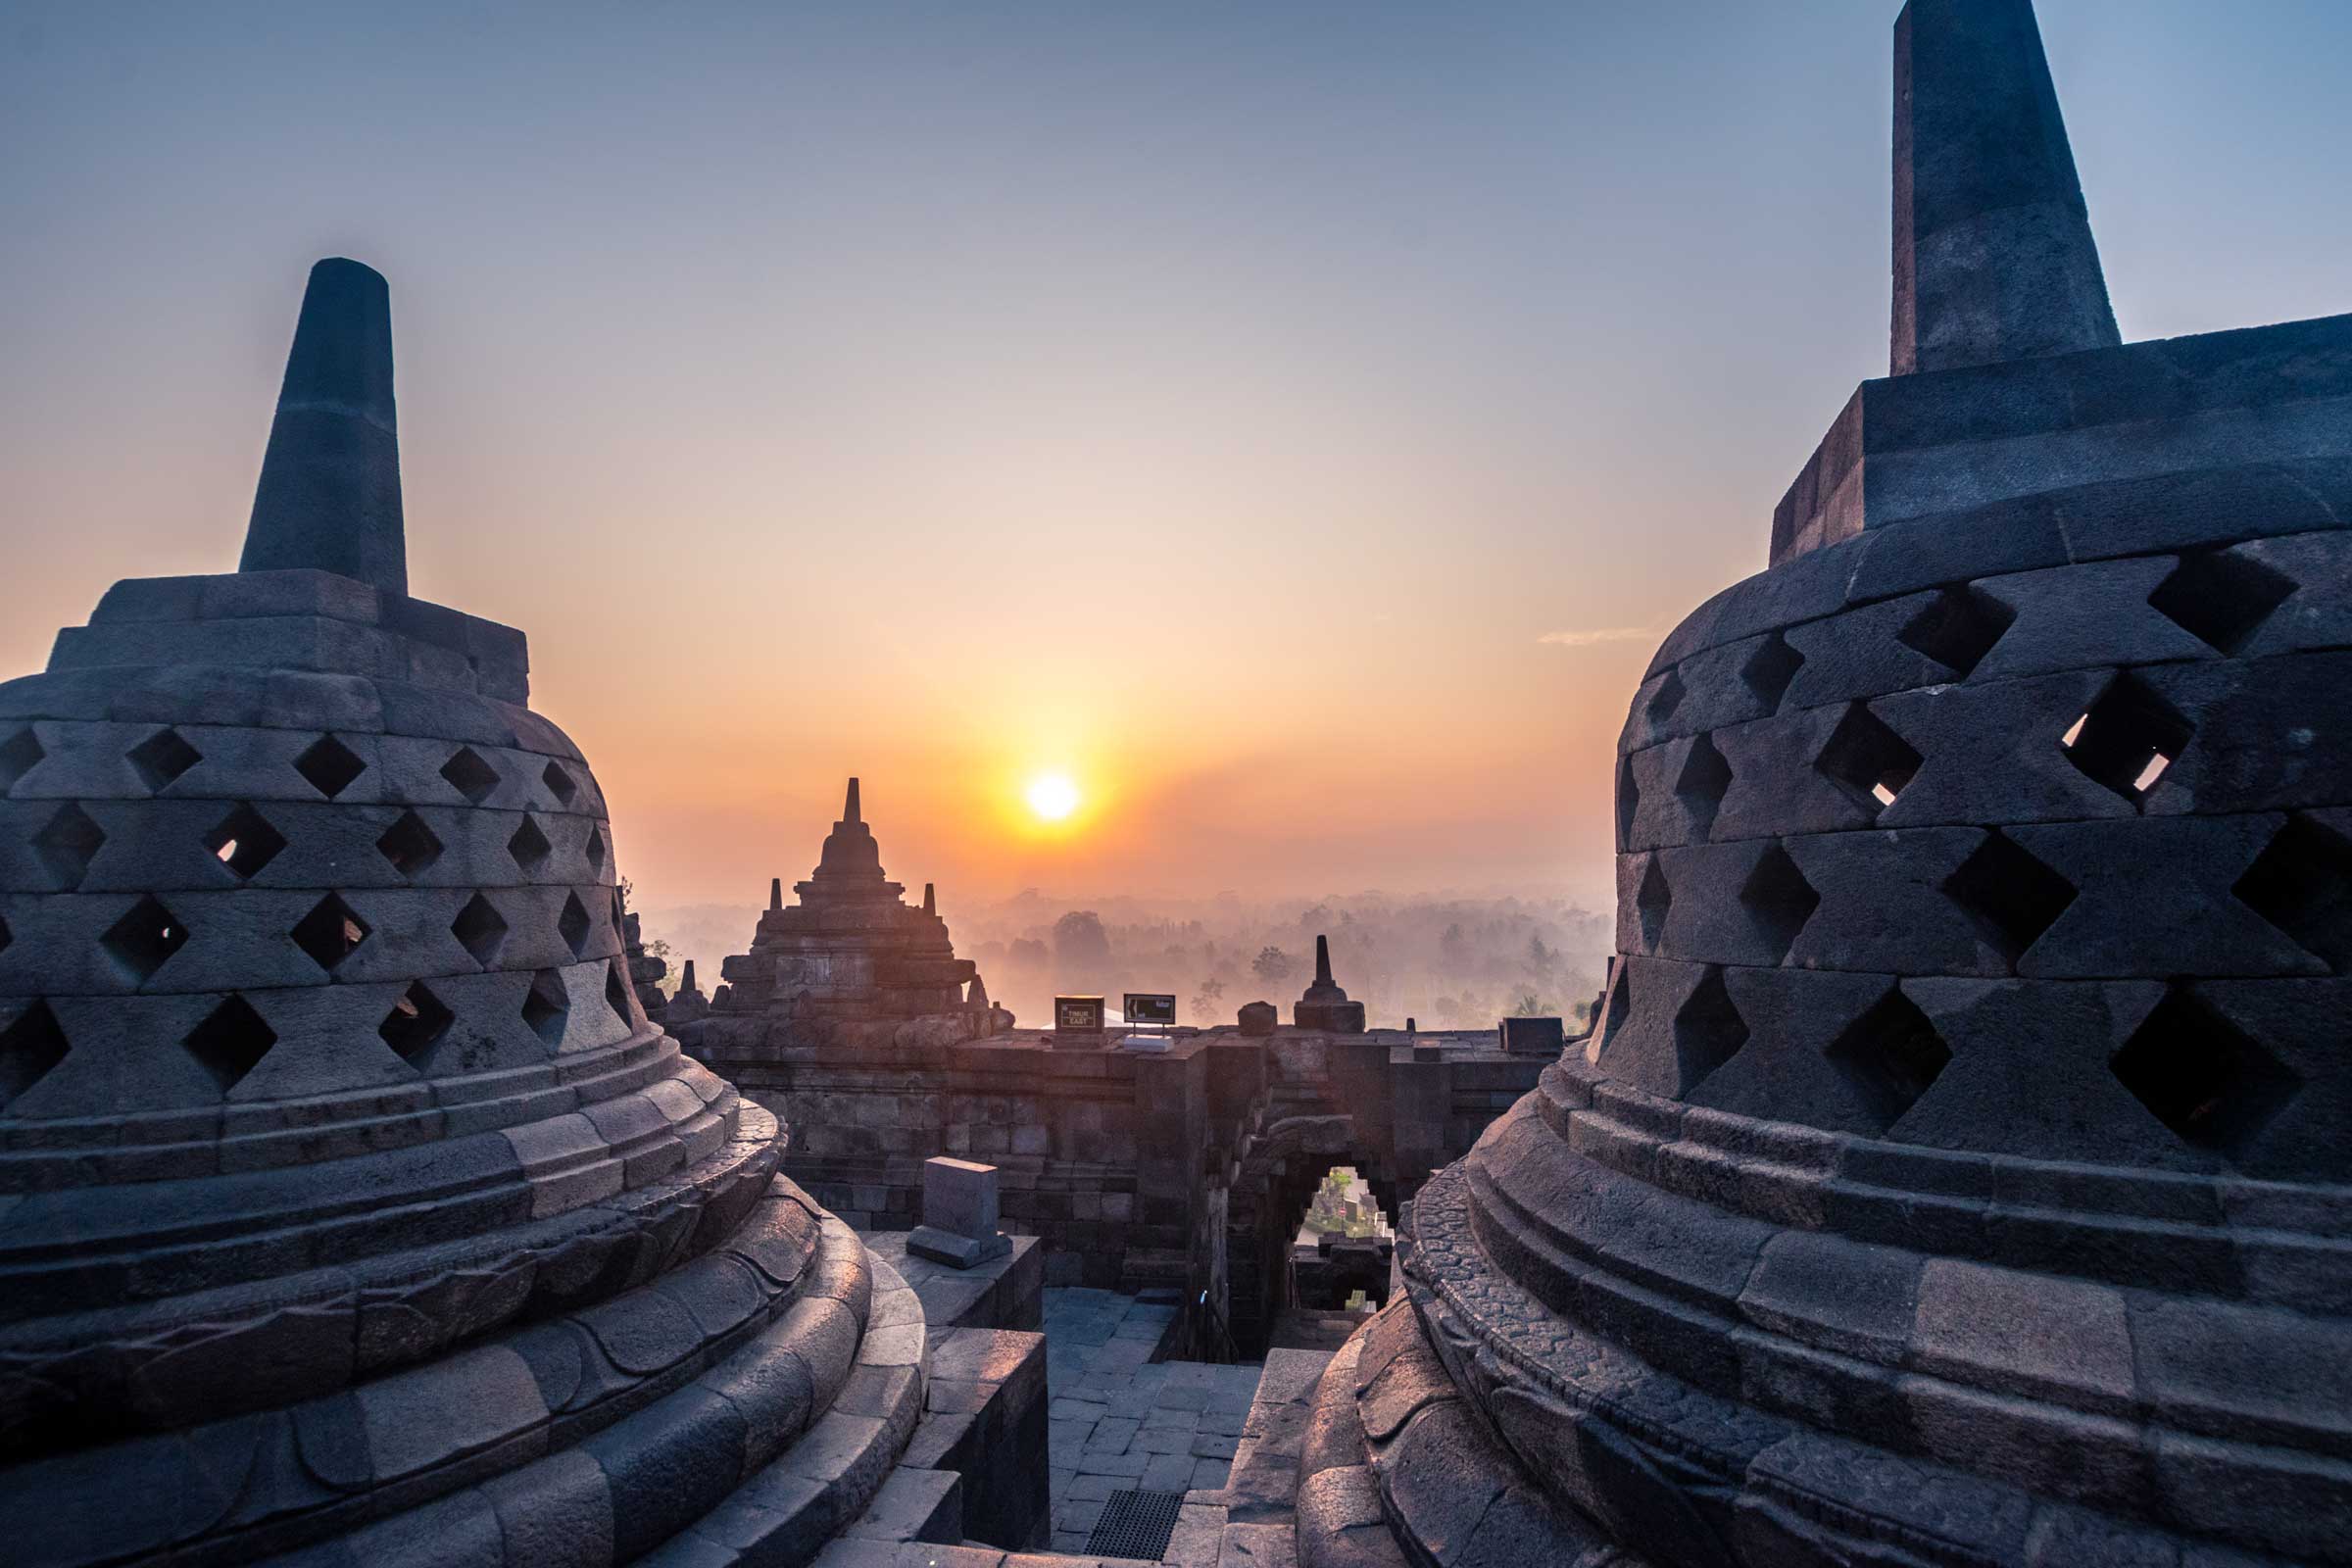 Sunrise at Borobudur – Bucket List Experience or Tourist Trap?